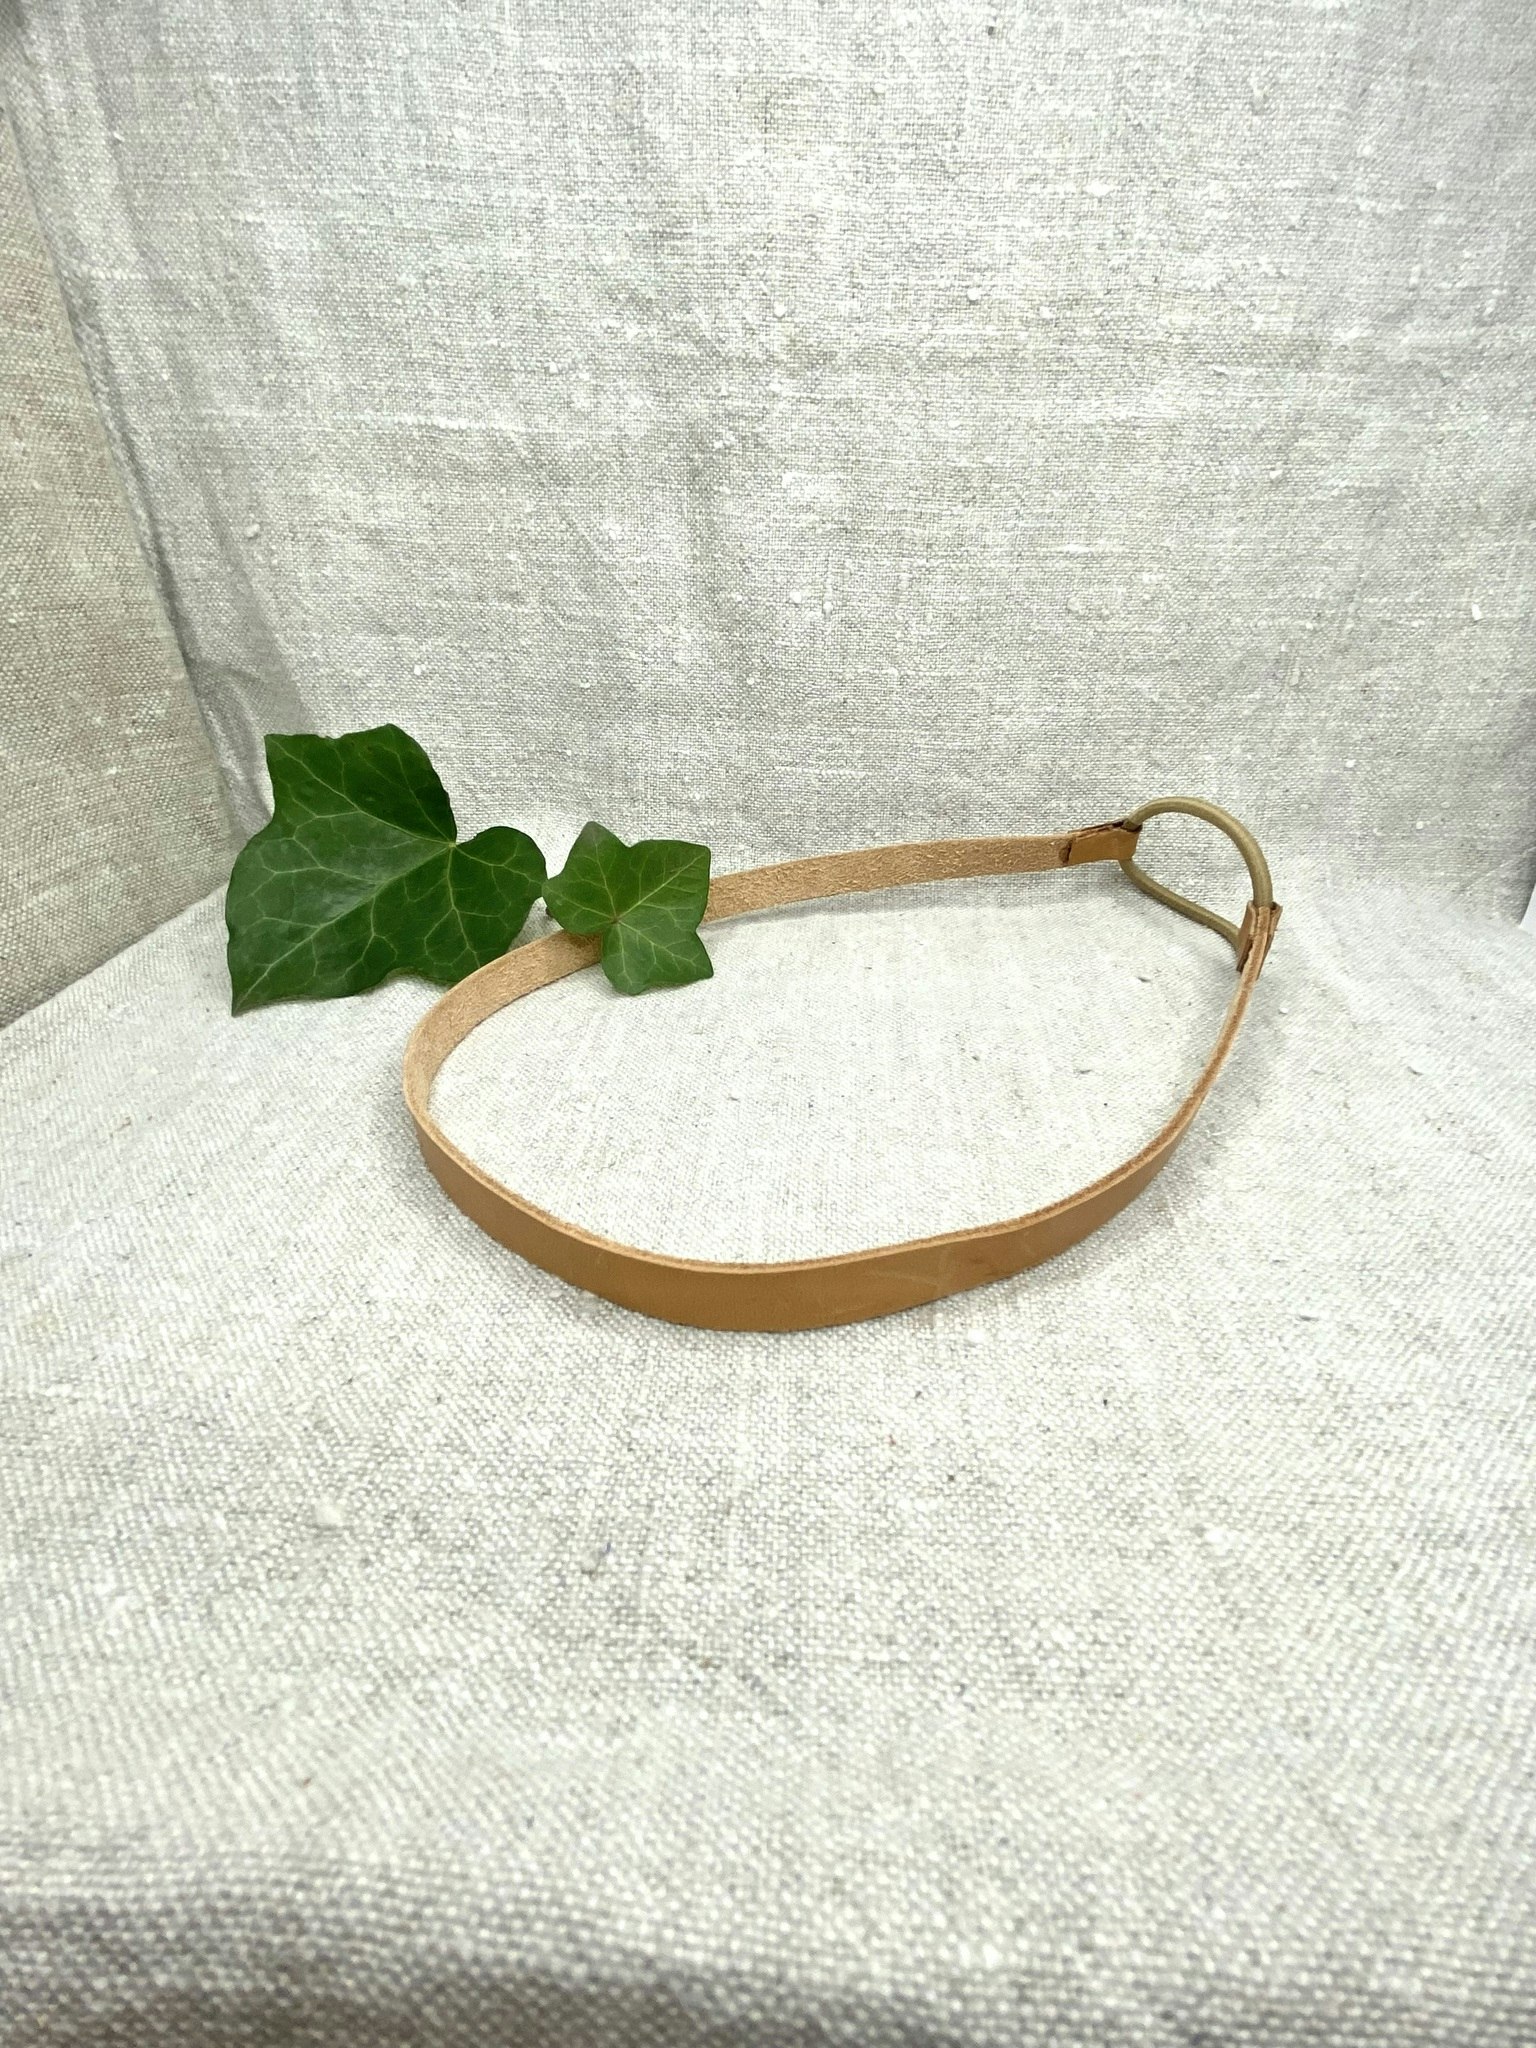 Läder-hårband, natur 1 cm. Med eller utan rosett